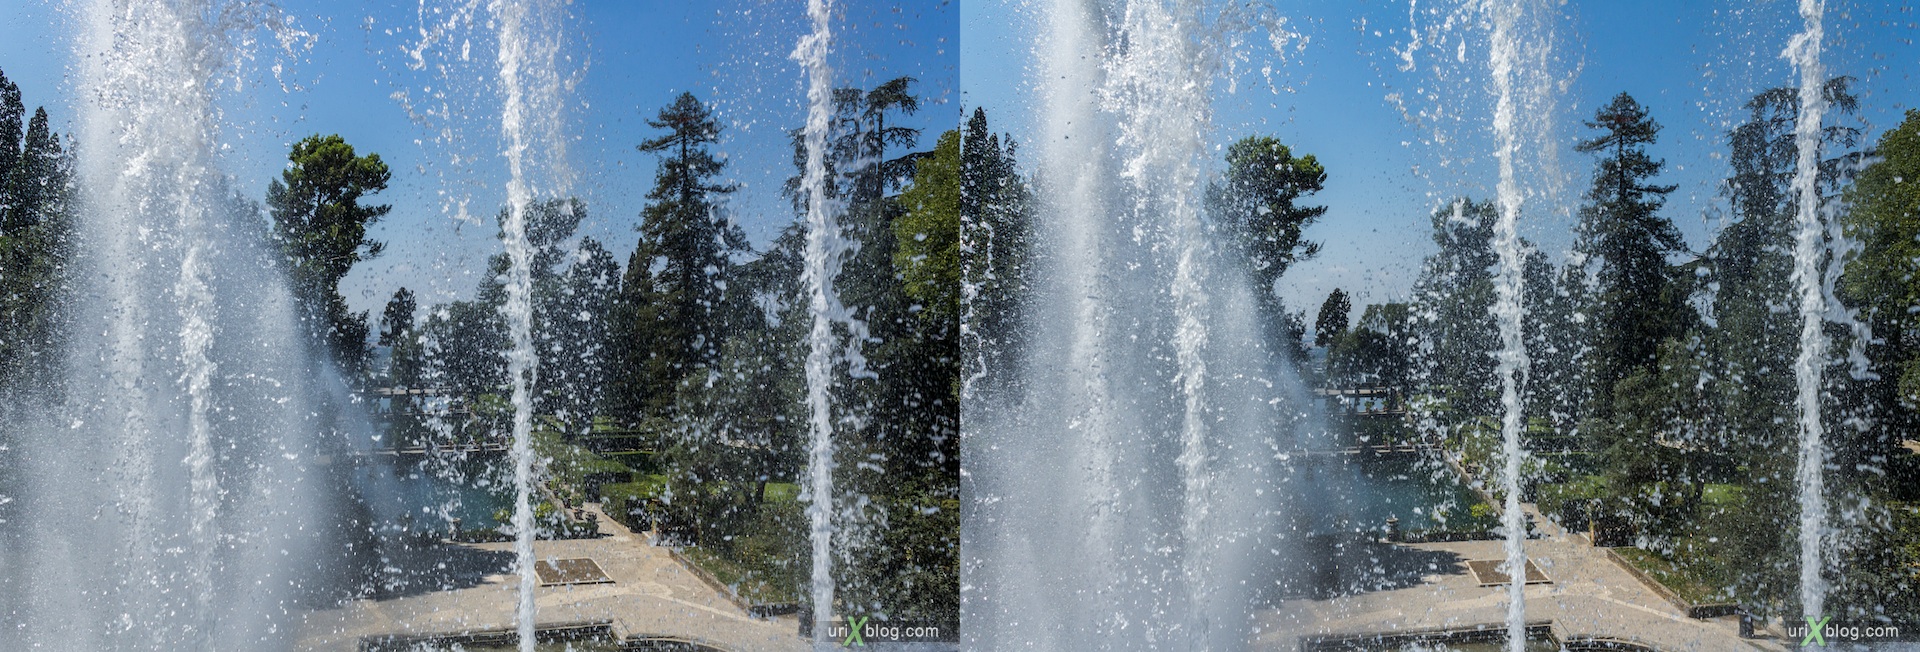 2012, Fountain of Neptune, villa D'Este, Italy, Tivoli, Rome, 3D, stereo pair, cross-eyed, crossview, cross view stereo pair